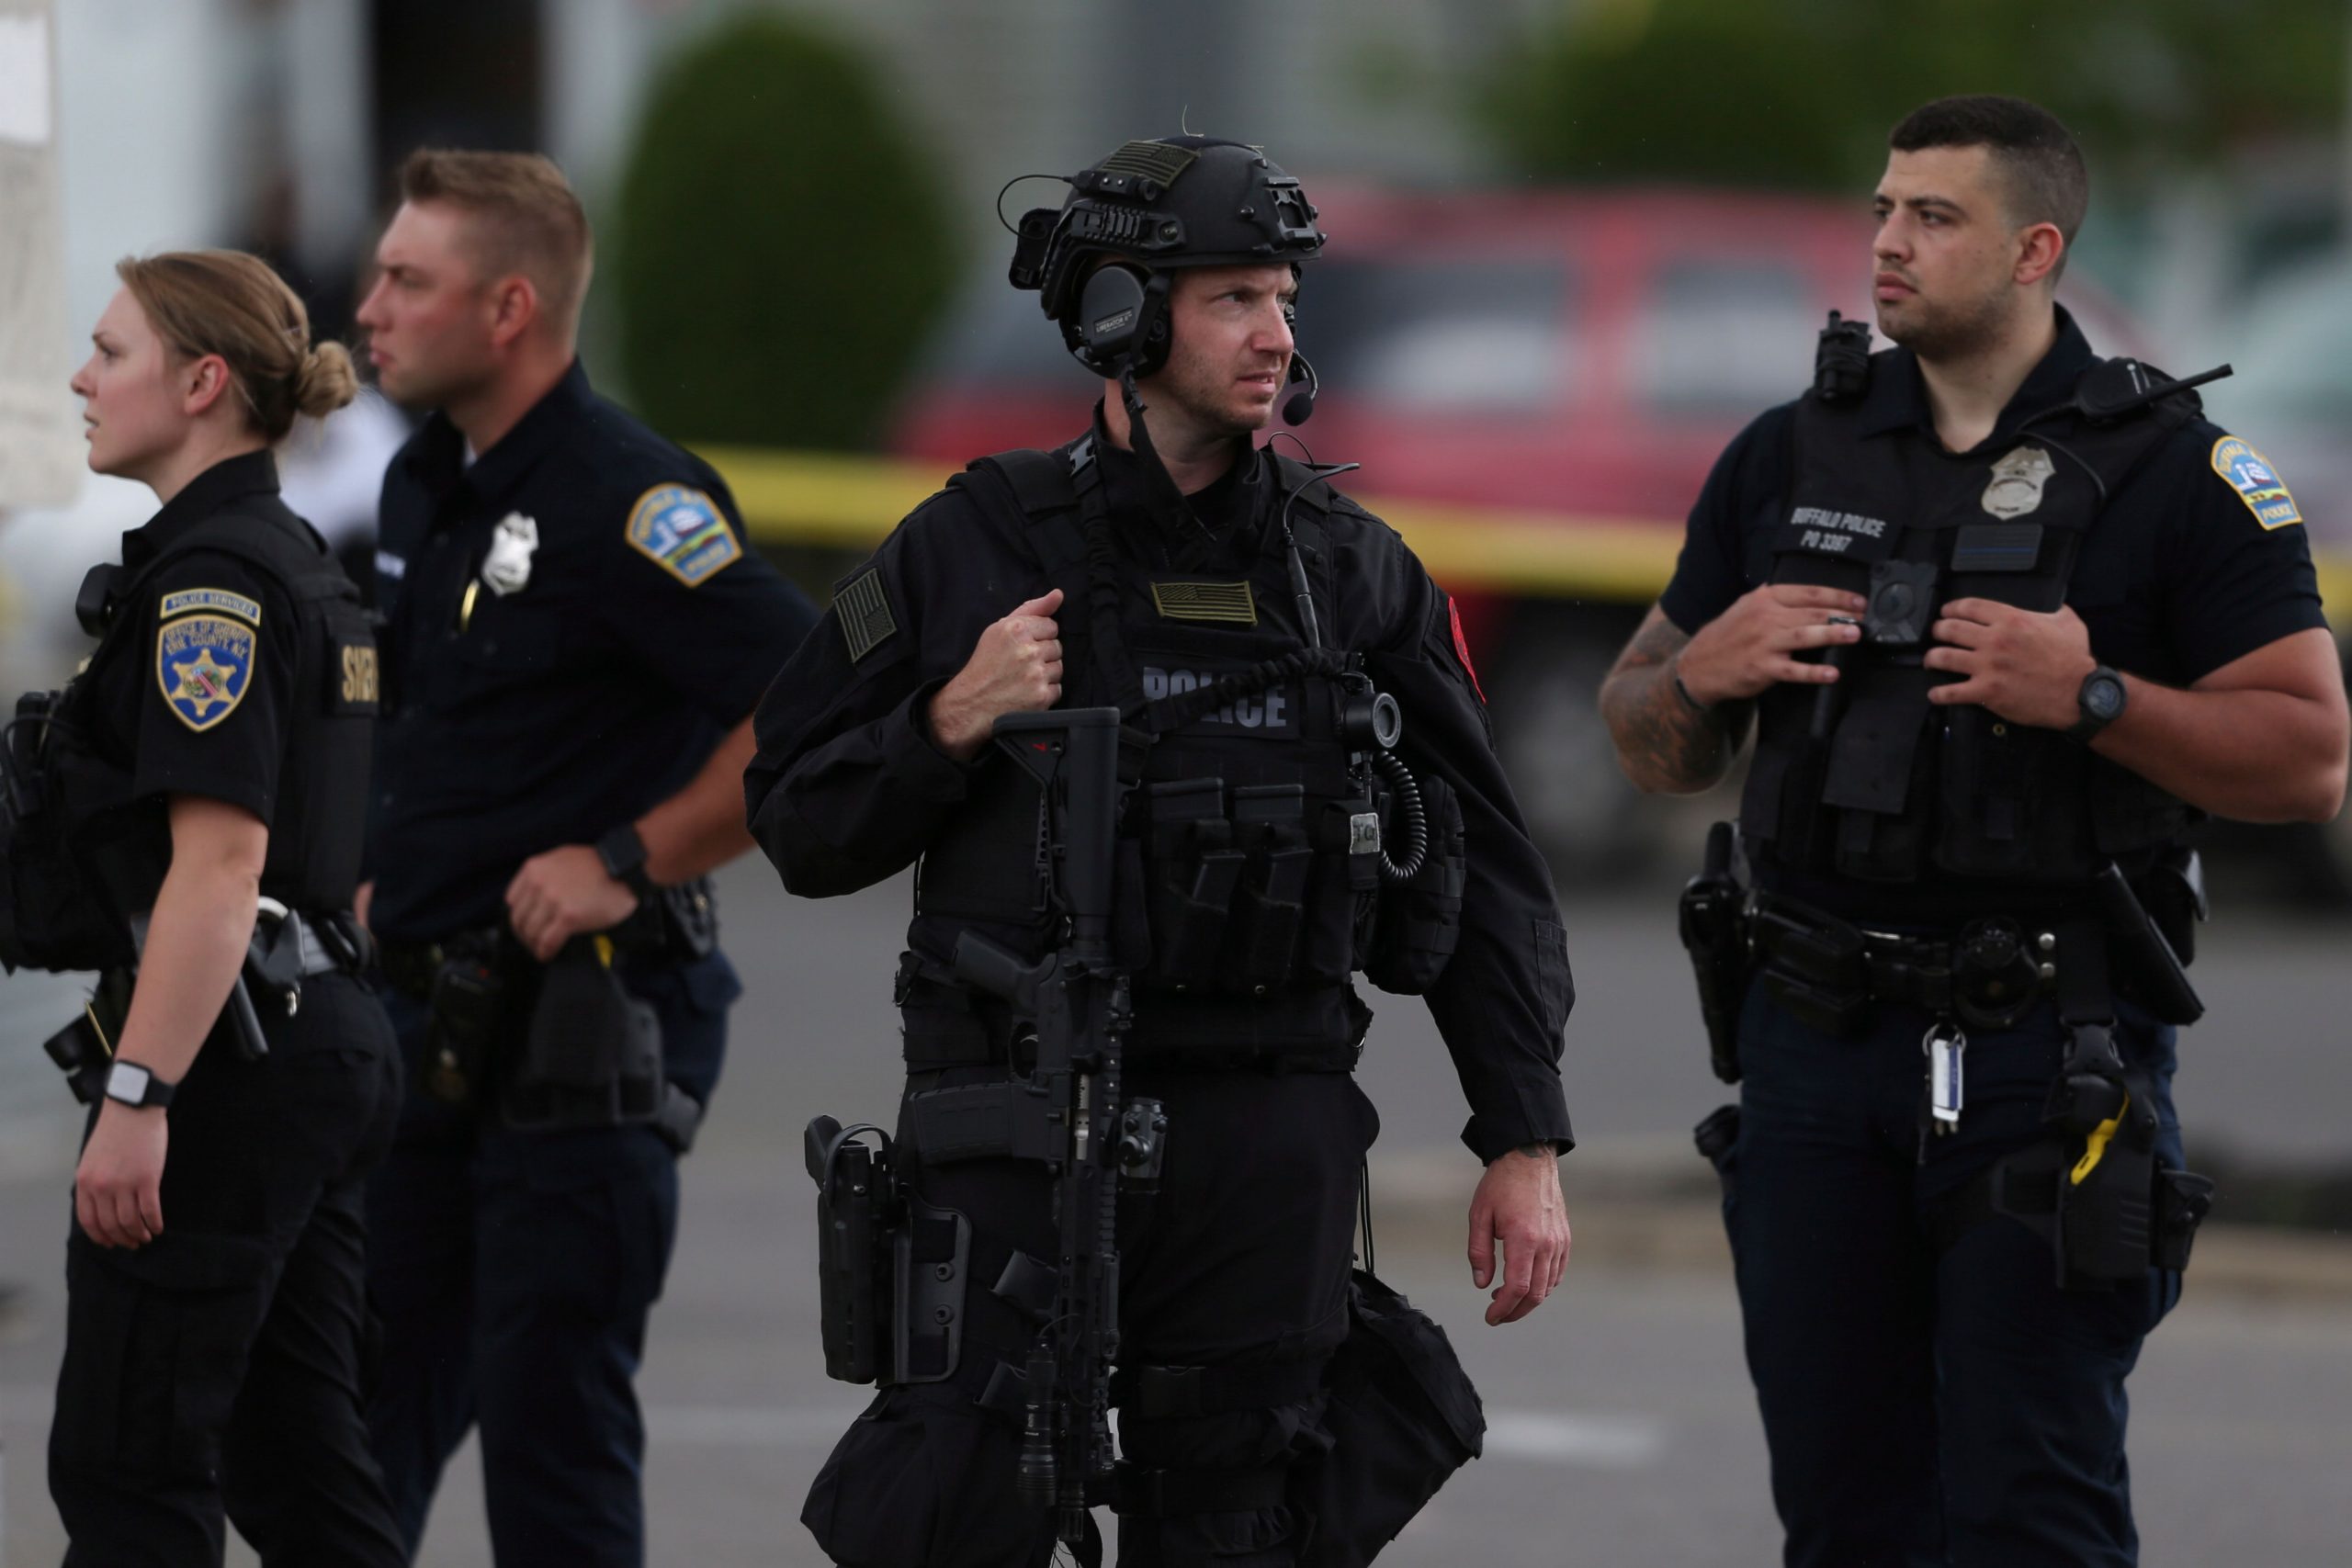 NY Buffalo shooting: Accused gunman followed familiar radicalization path